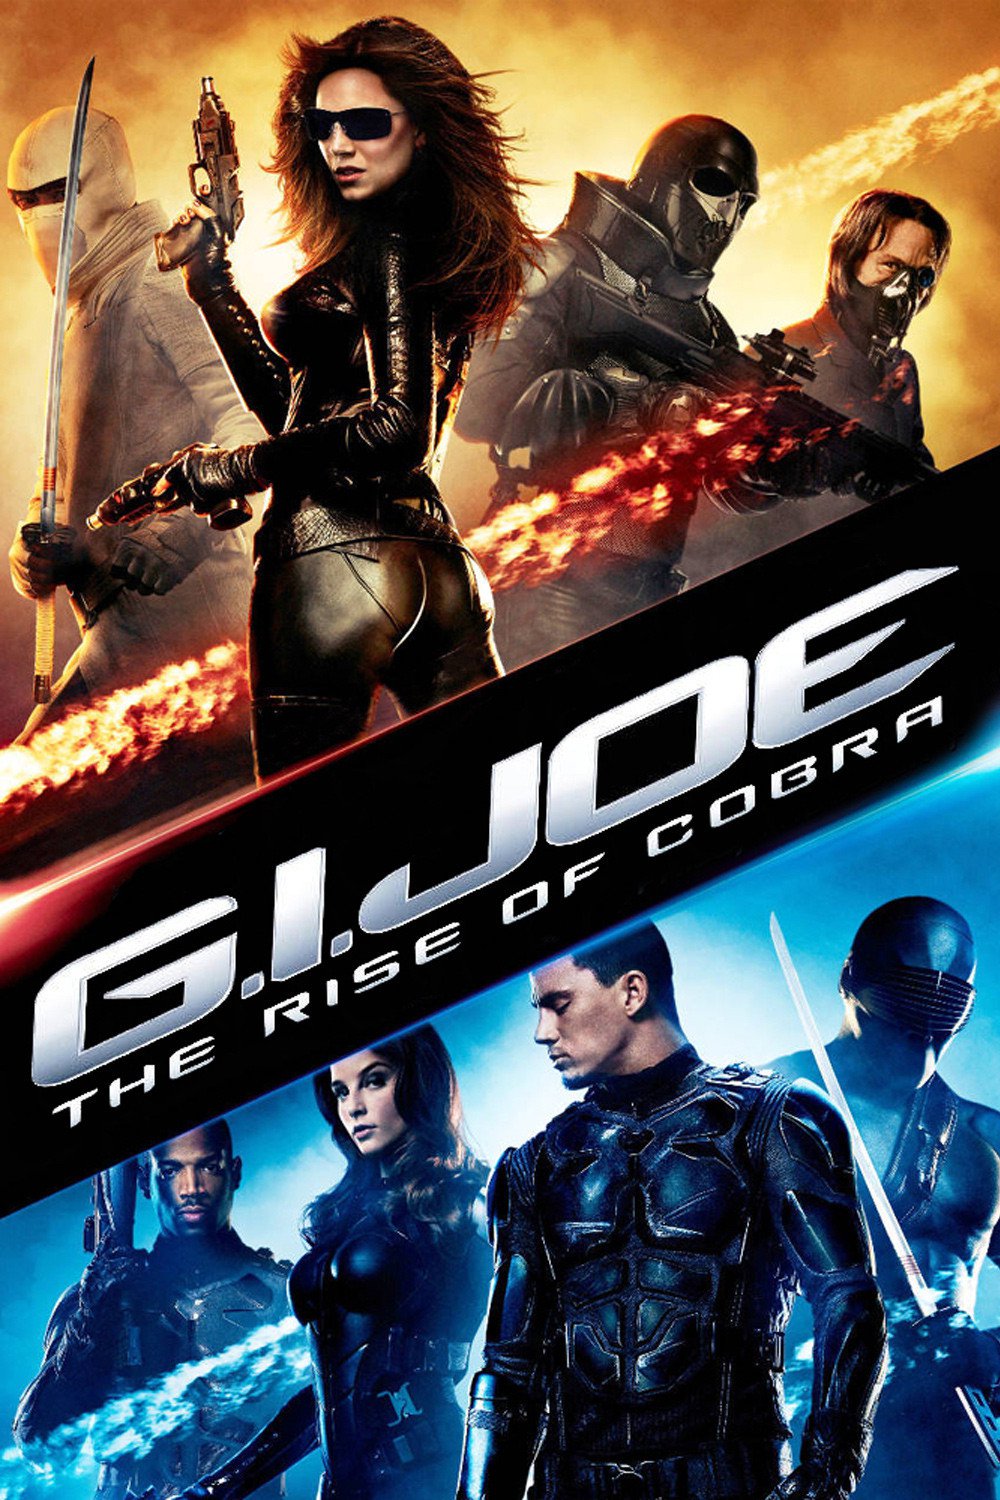 G.i. joe the rise of cobra